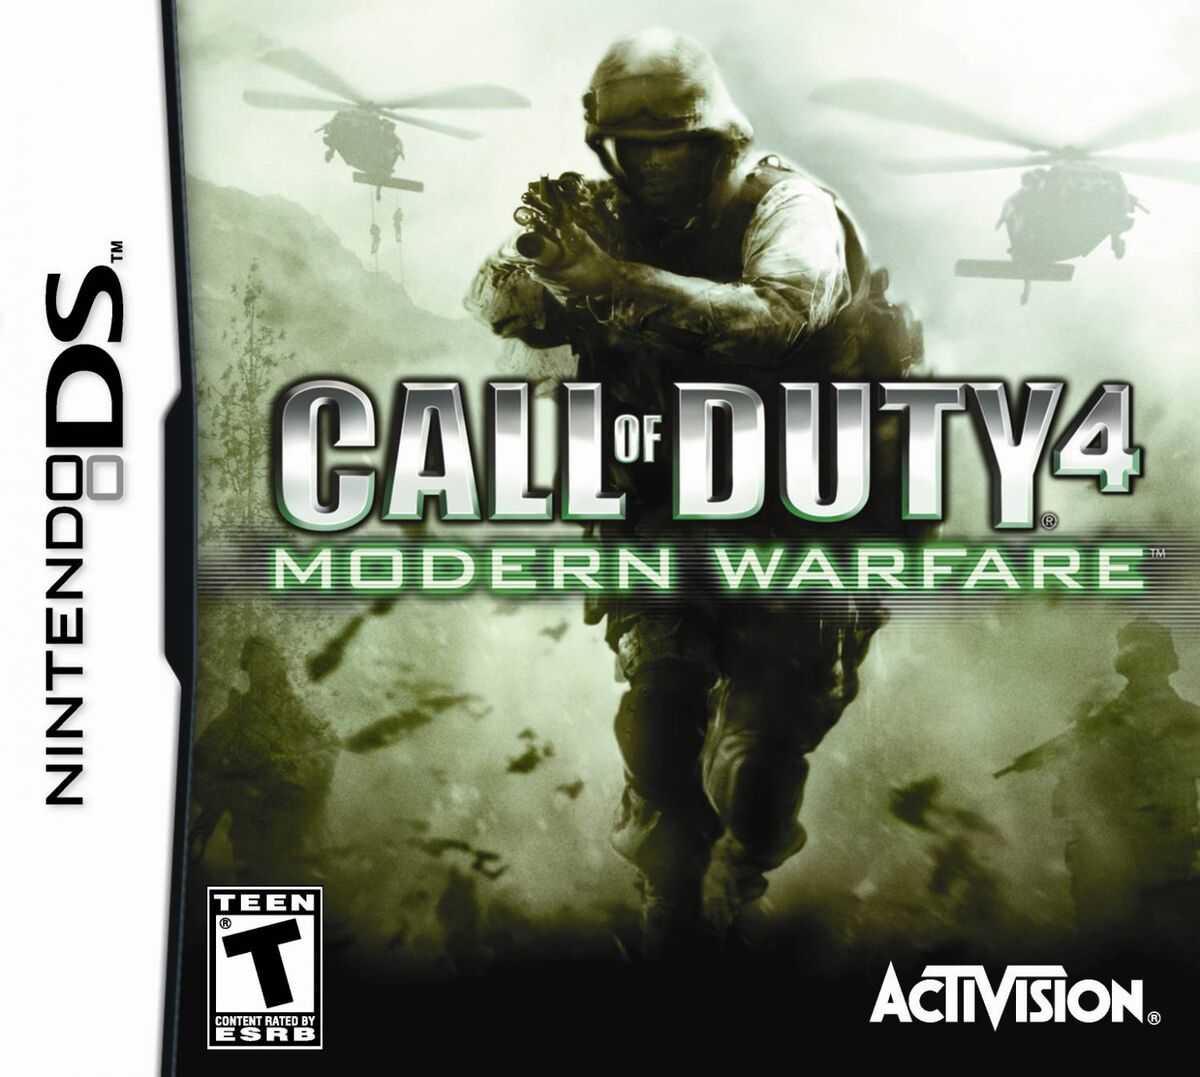 Call of duty modern warfare nintendo ds. Call of Duty 2: Modern Warfare (Nintendo DS). Call of Duty 4: Modern Warfare (Nintendo DS) Чернобыля. Call of Duty Modern Warfare 2 Xbox 360.